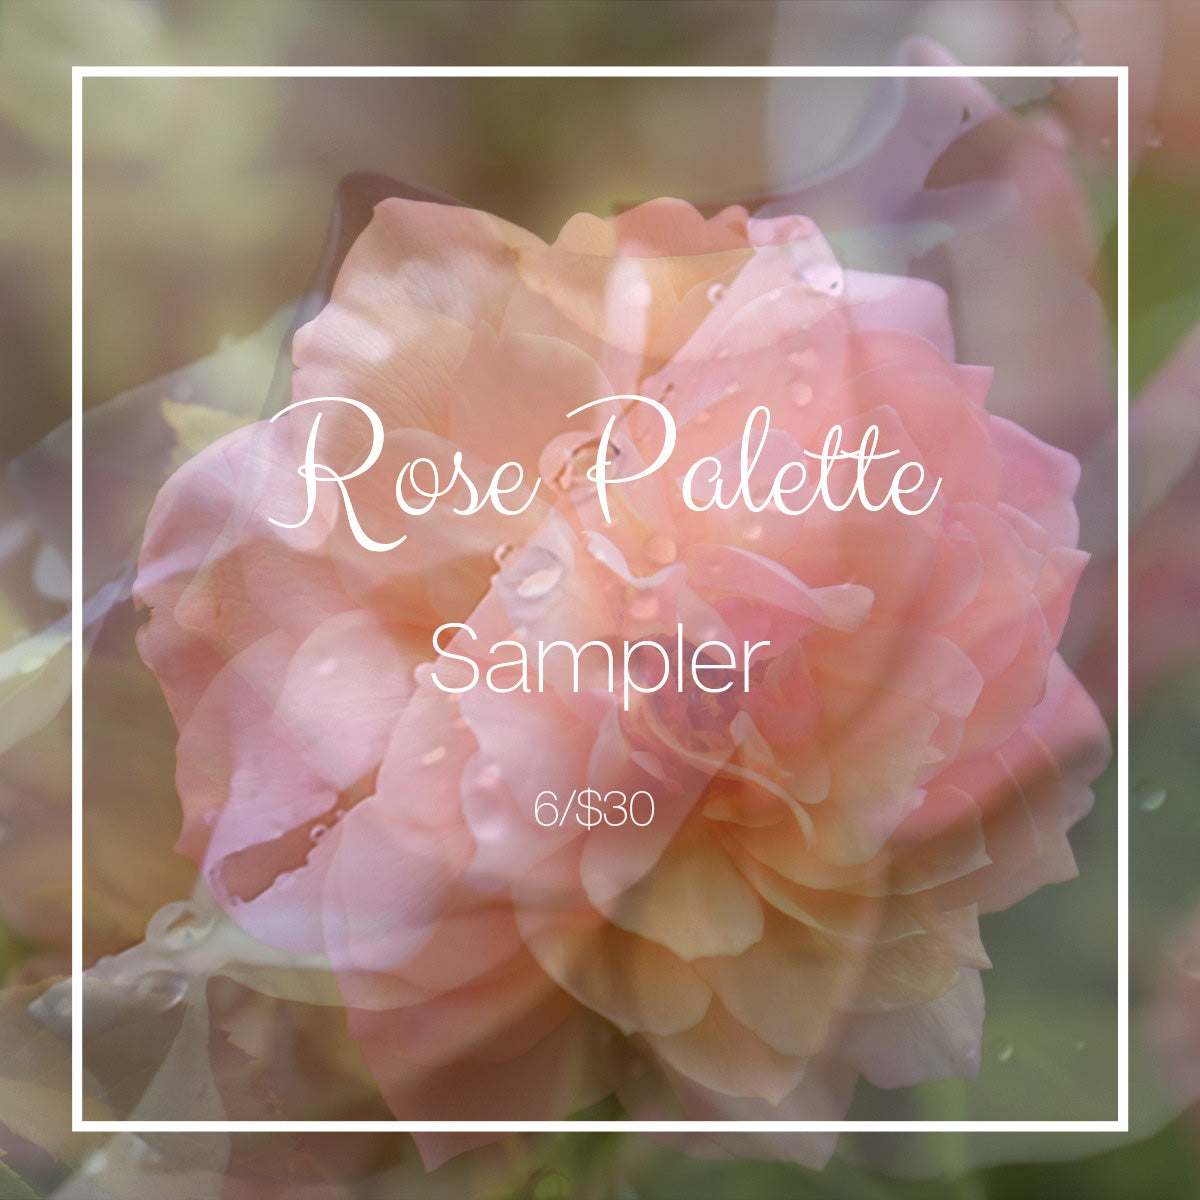 Rose Palette Sampler at Indigo Perfumery